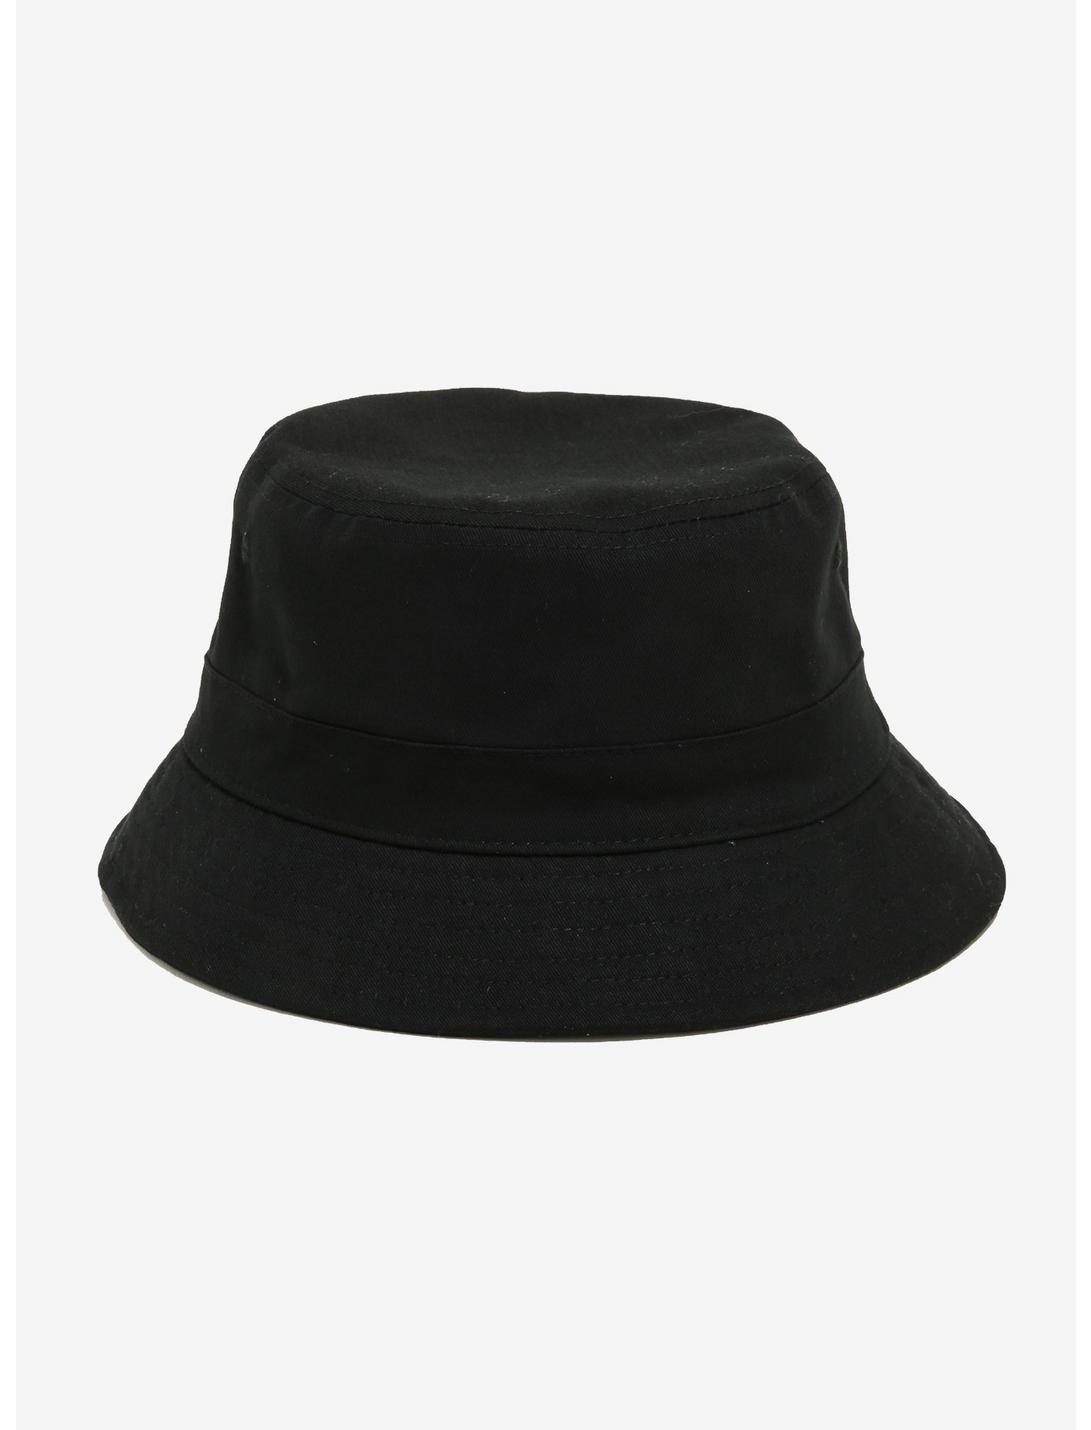 Black Bucket Hat, , hi-res